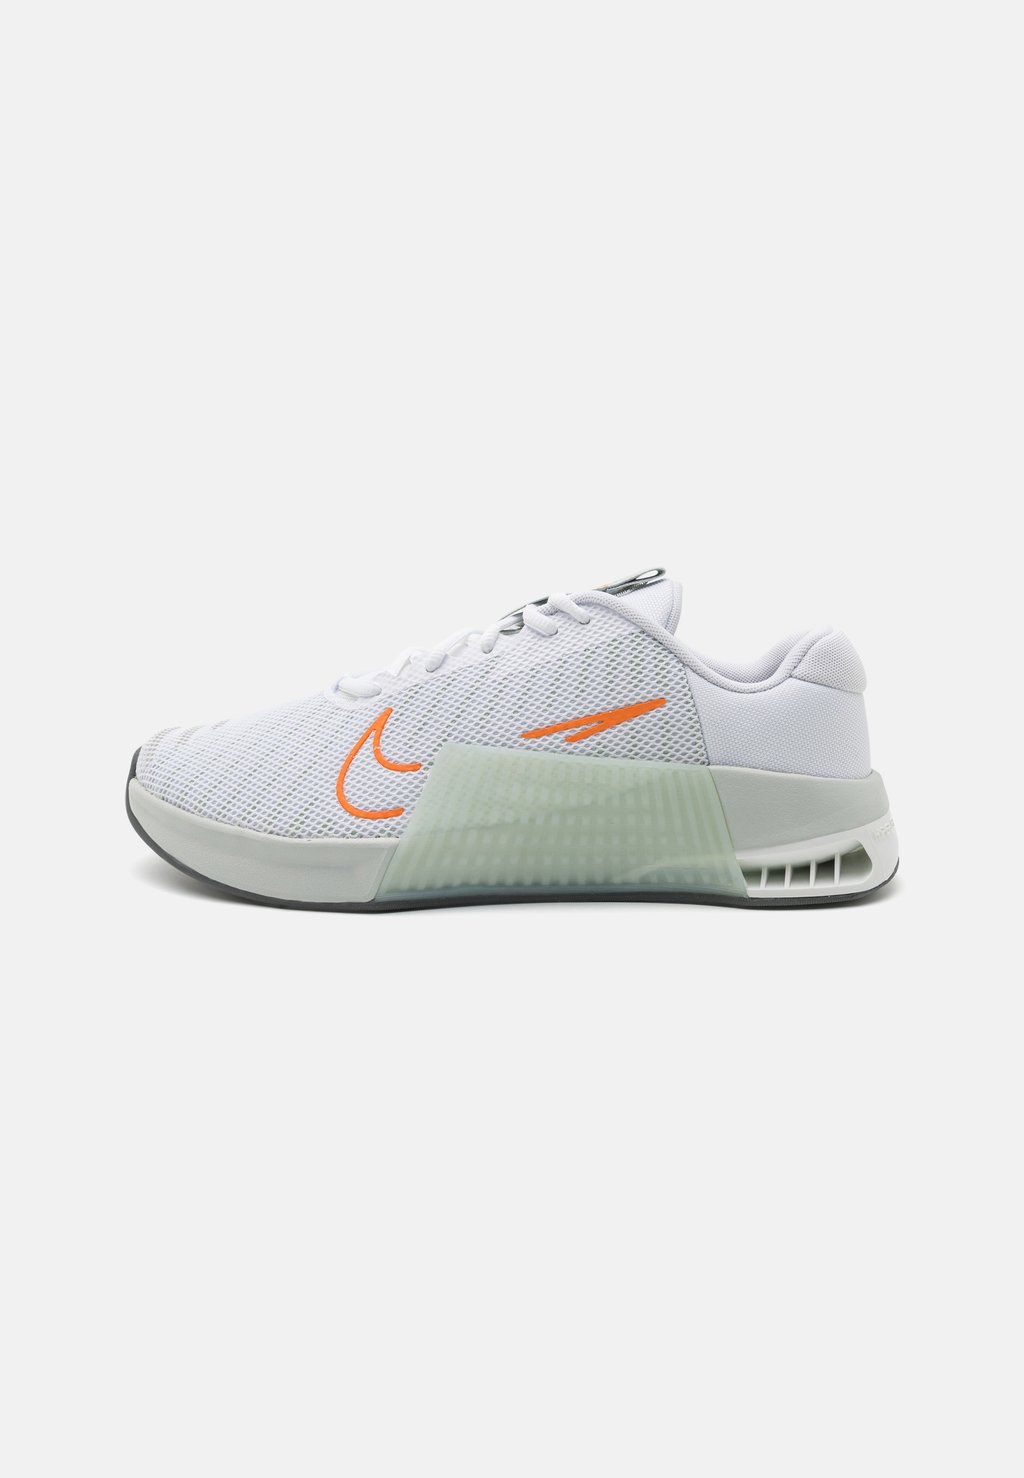 Кроссовки Metcon 9 Nike, цвет white/light silver/bright mandarin/iron grey